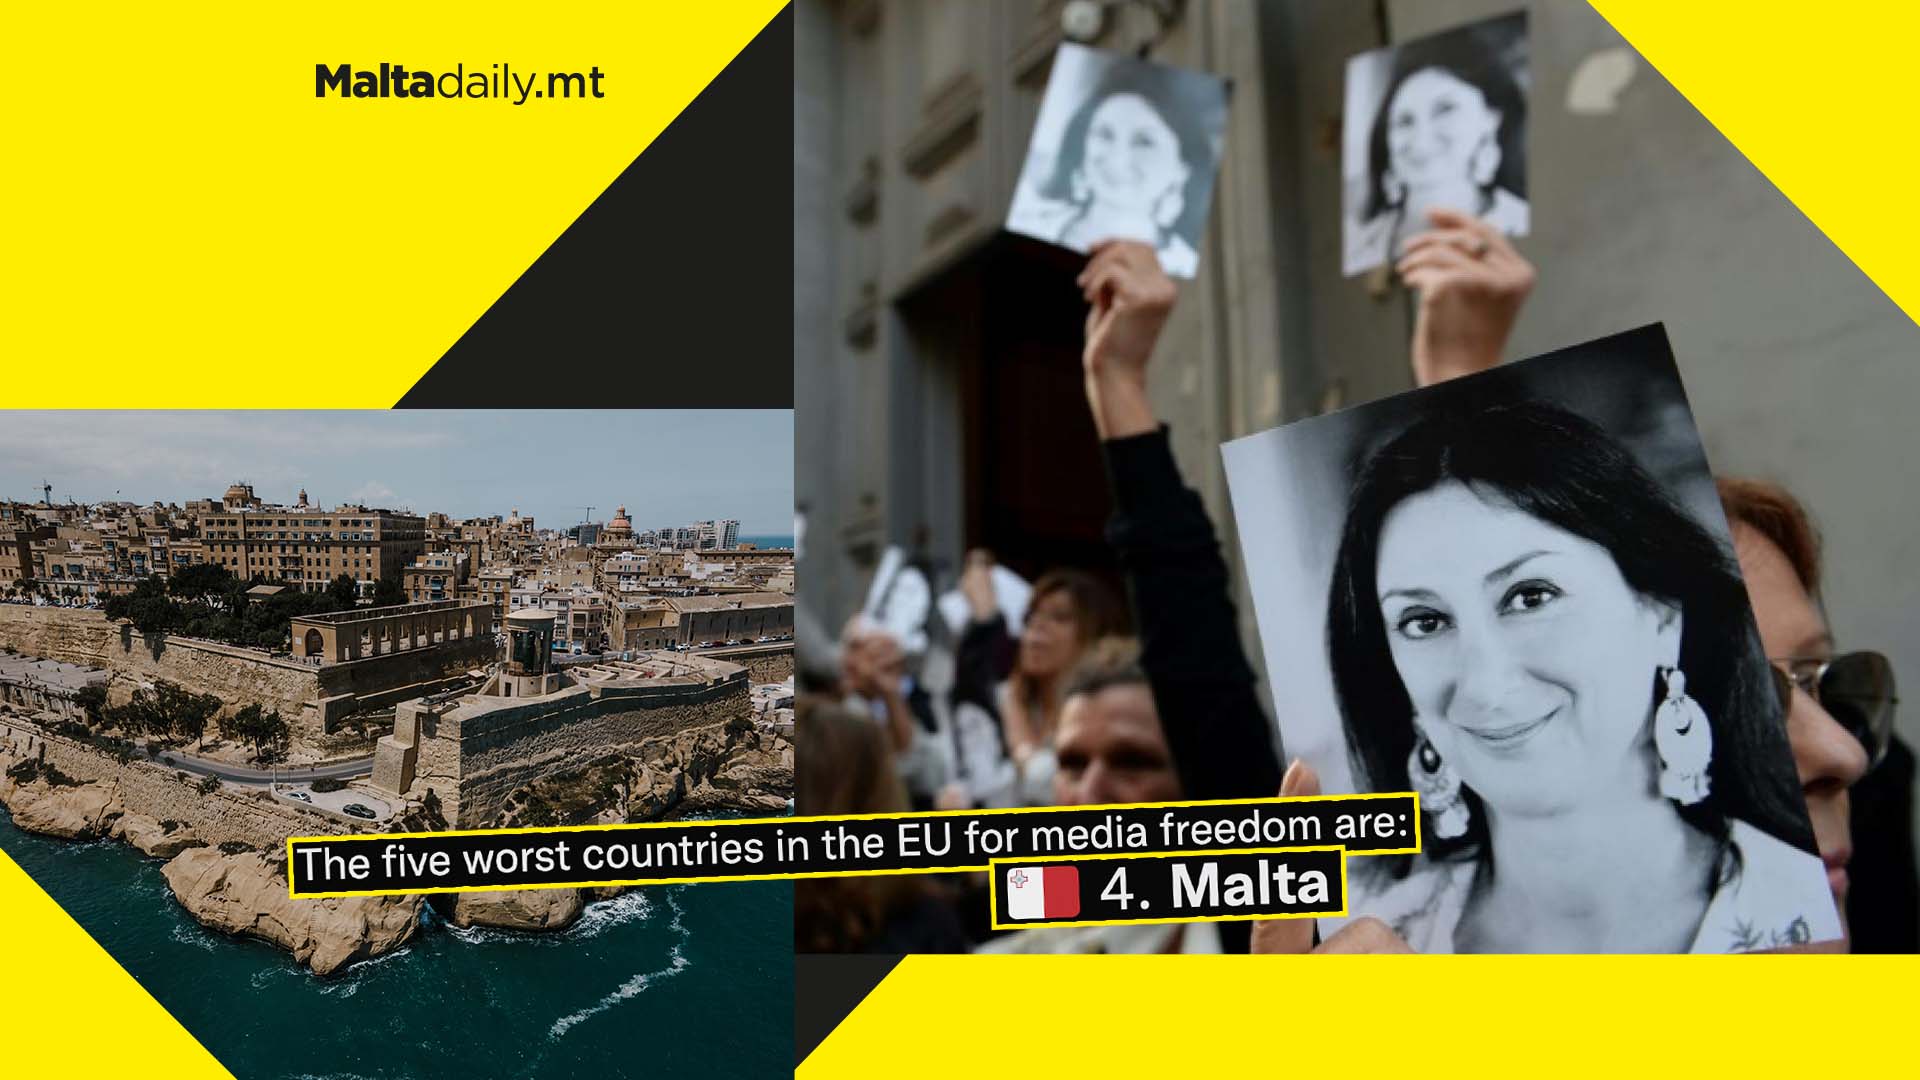 Malta fourth worst EU country for media freedom, according to Politico Europe